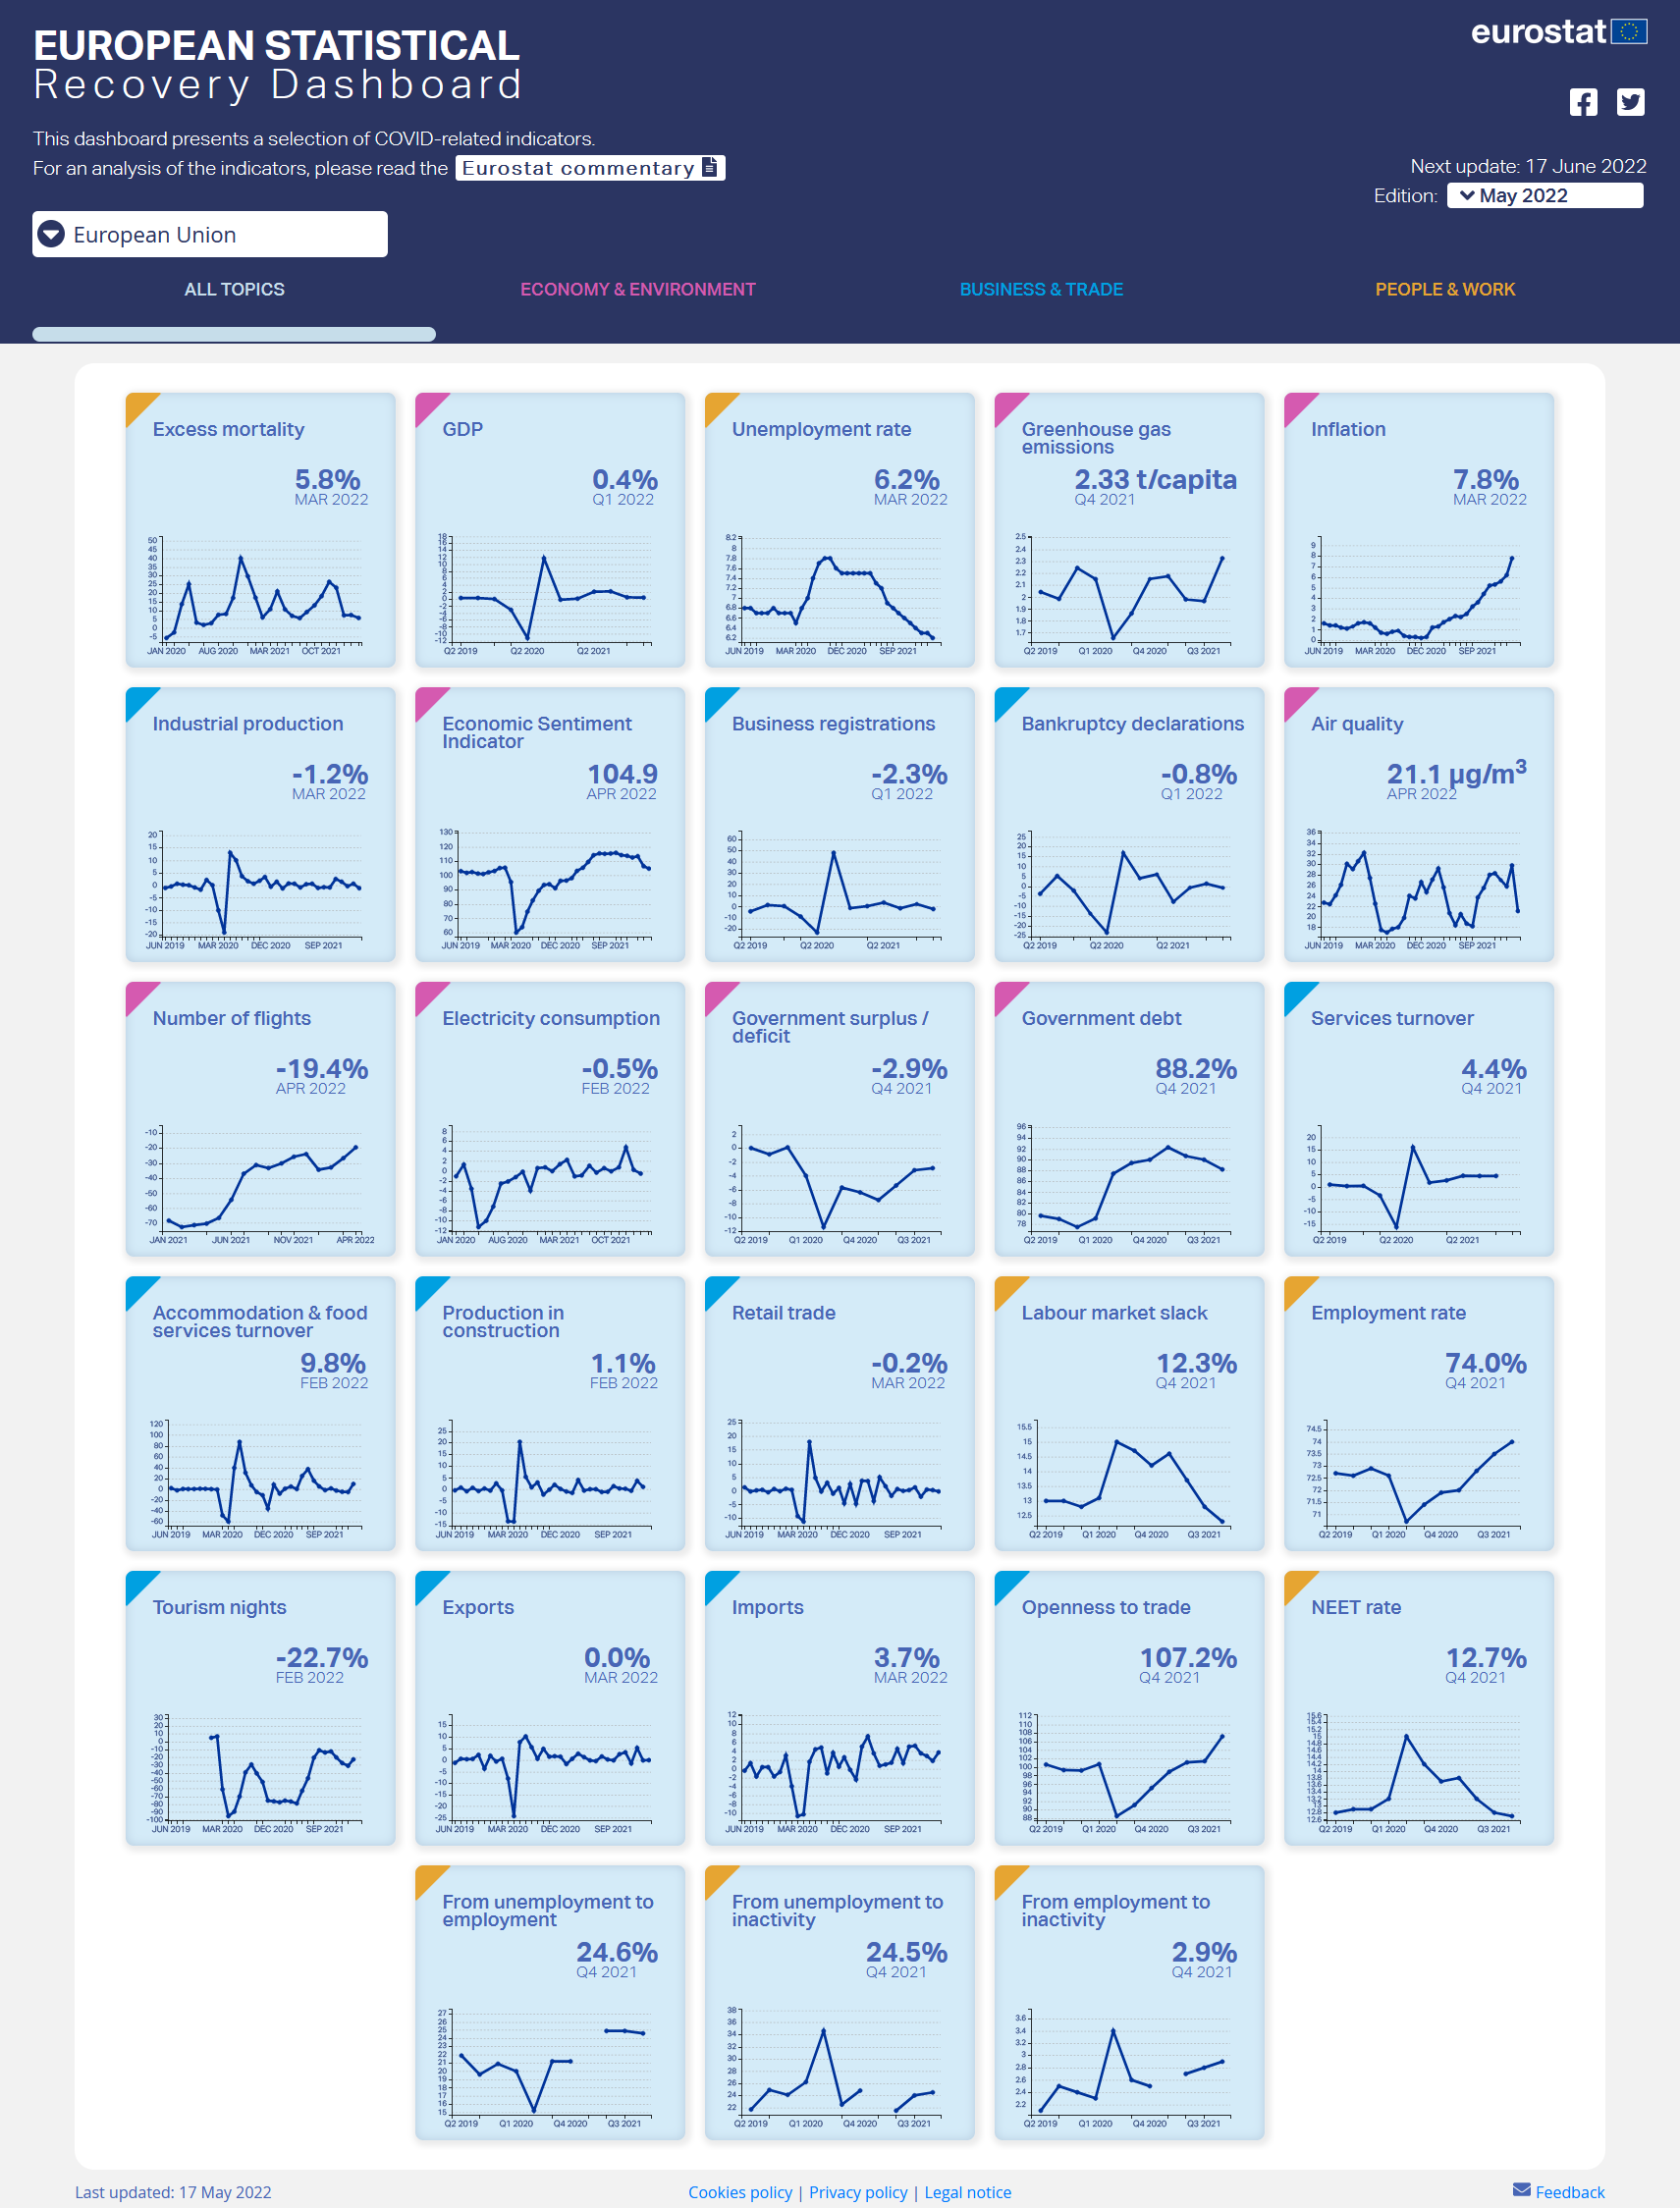 Screenshot: European Statistical Recovery Dashboard